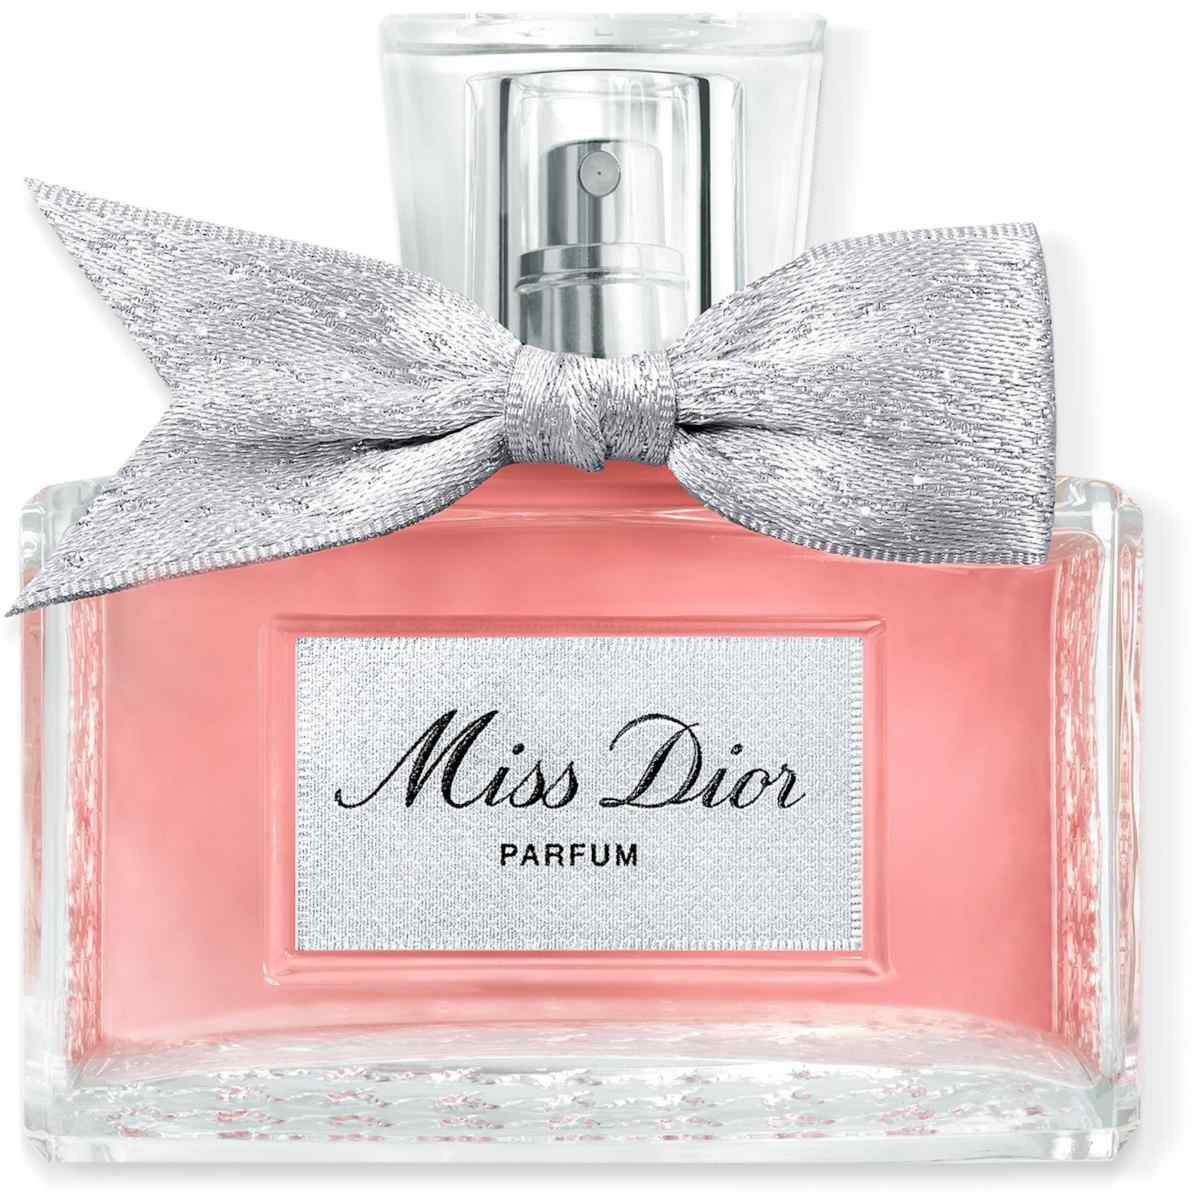 Dior profumo da donna Miss Dior Parfum